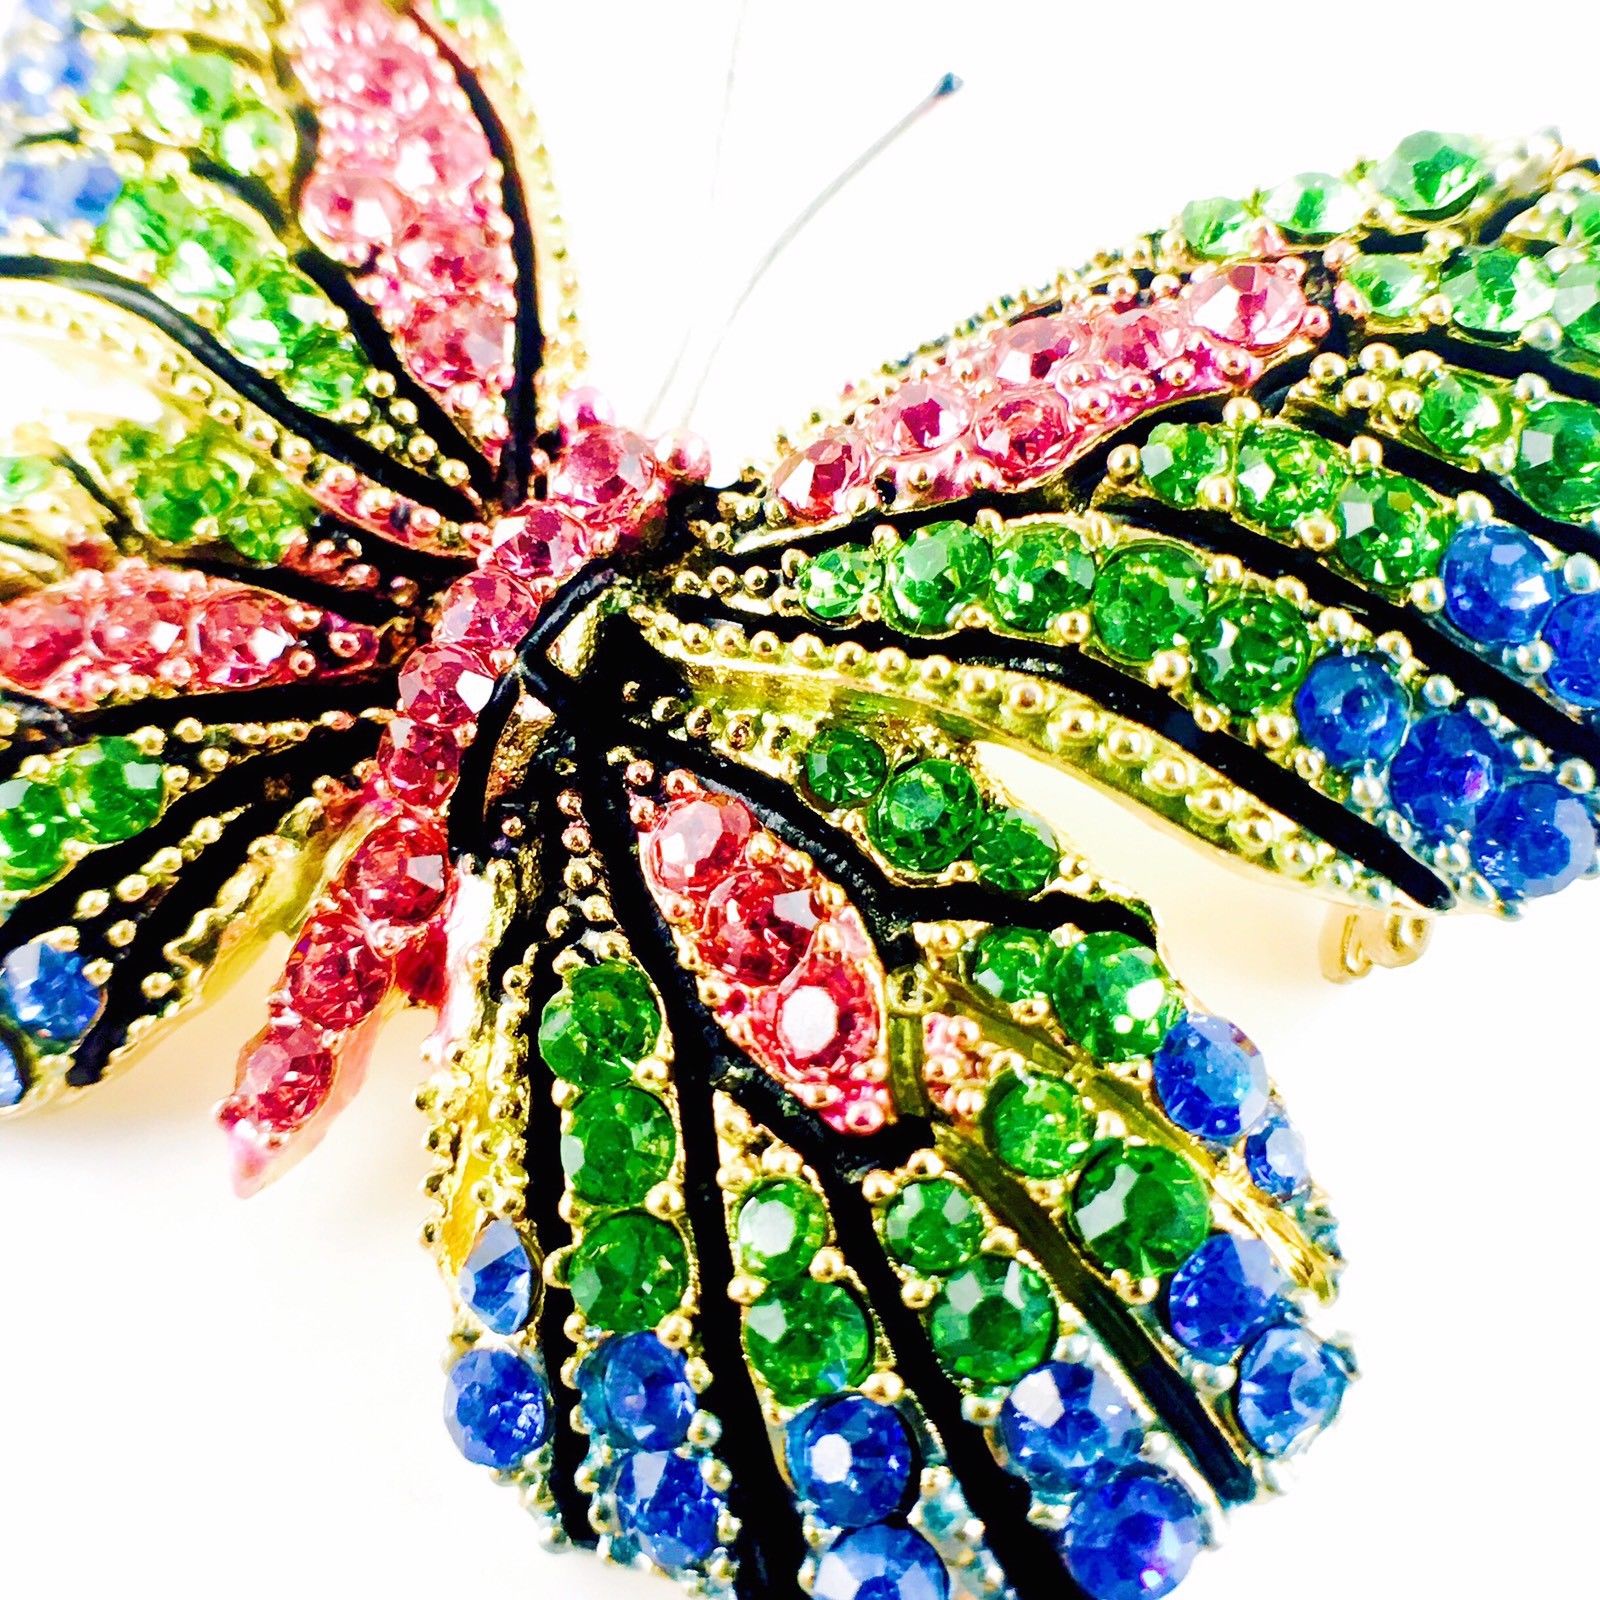 Fairy Butterfly Brooch Swarovski Crystal gold base multi colors Blue Green Pink, Brooch - MOGHANT